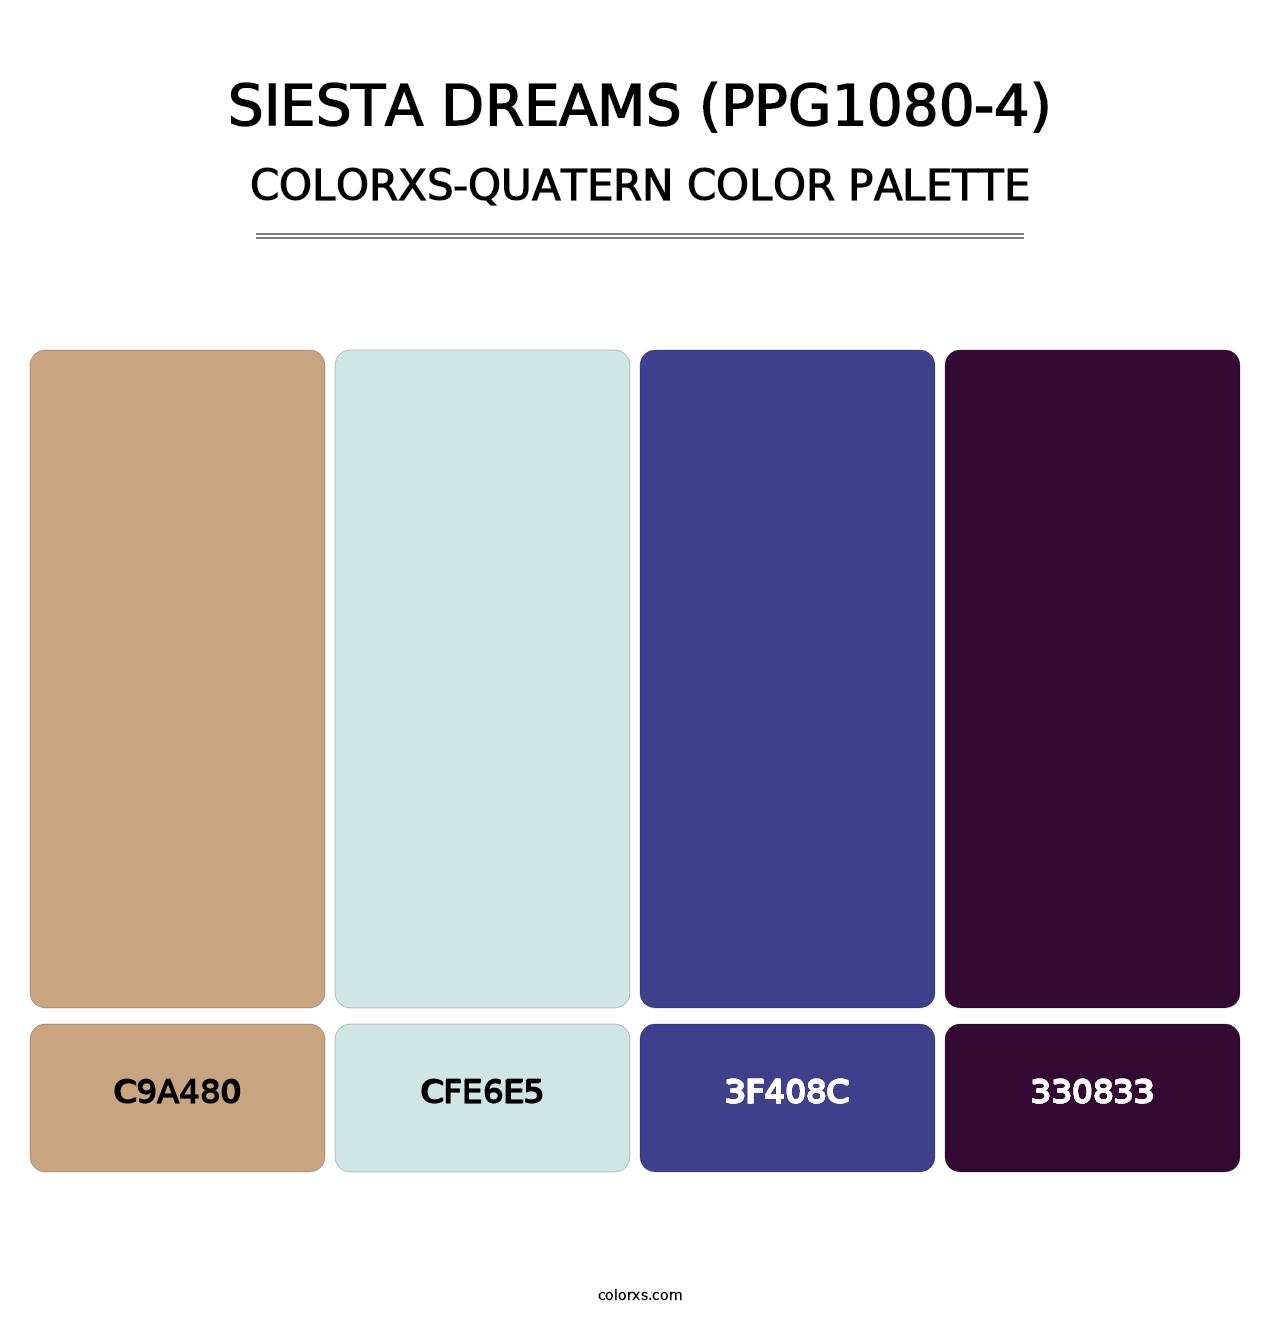 Siesta Dreams (PPG1080-4) - Colorxs Quatern Palette